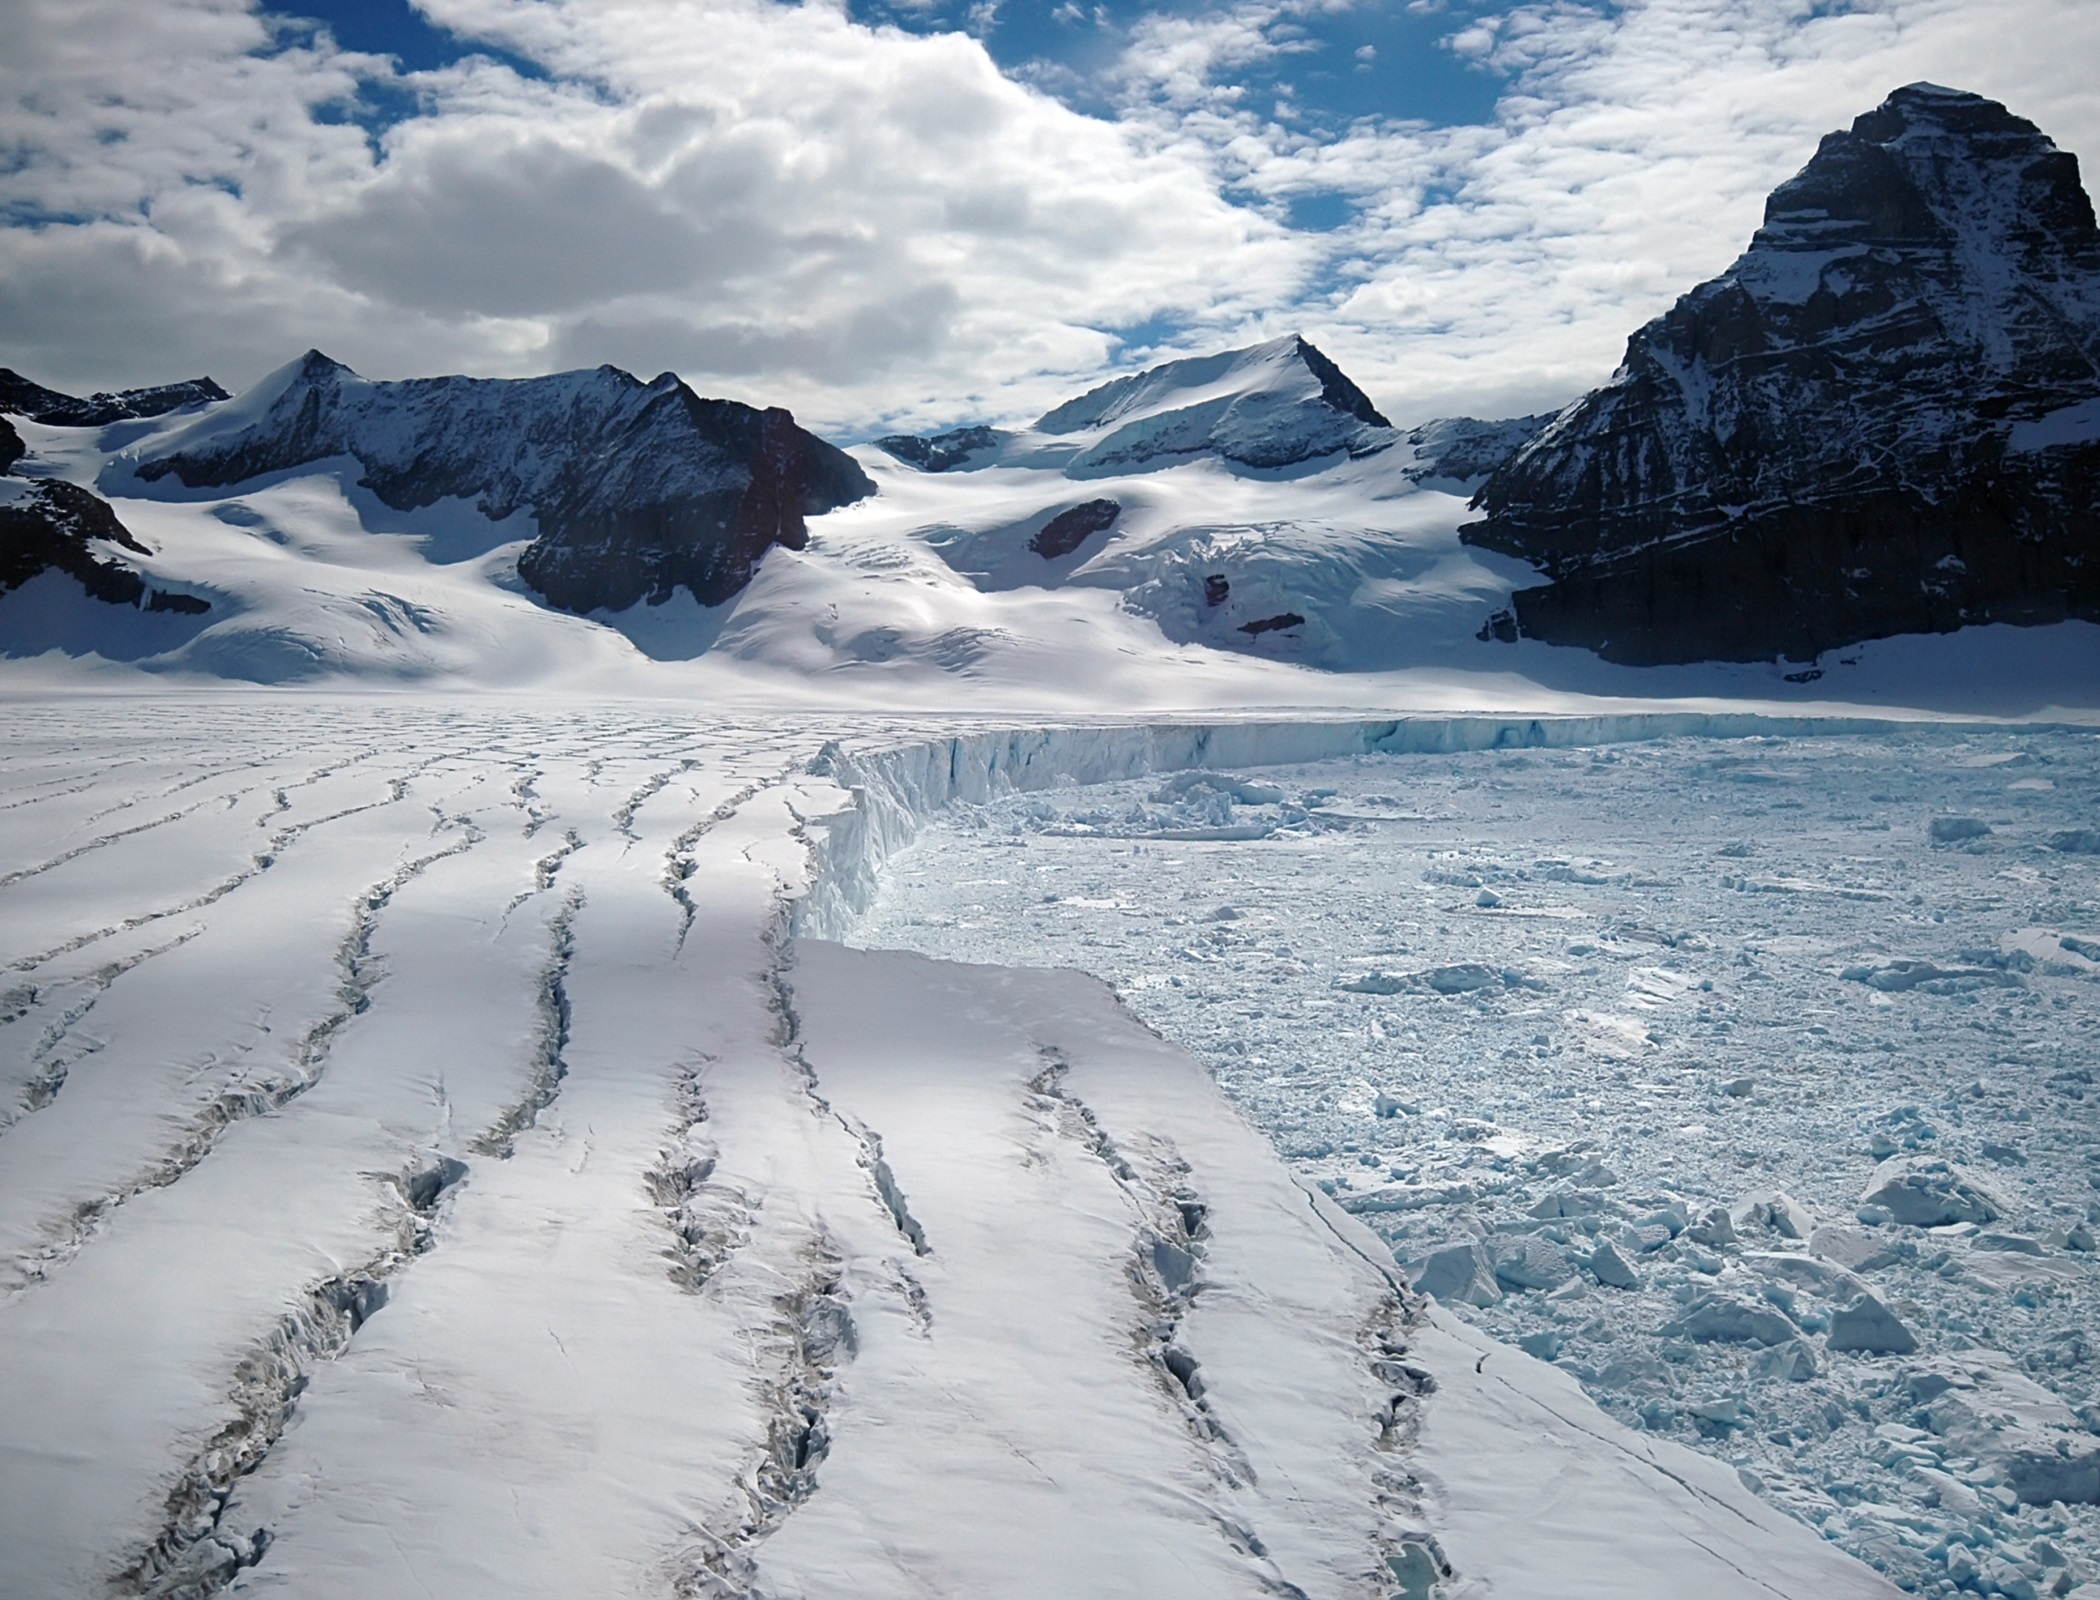 Antarctica has lost over 3000 billion tonnes of ice since 1996